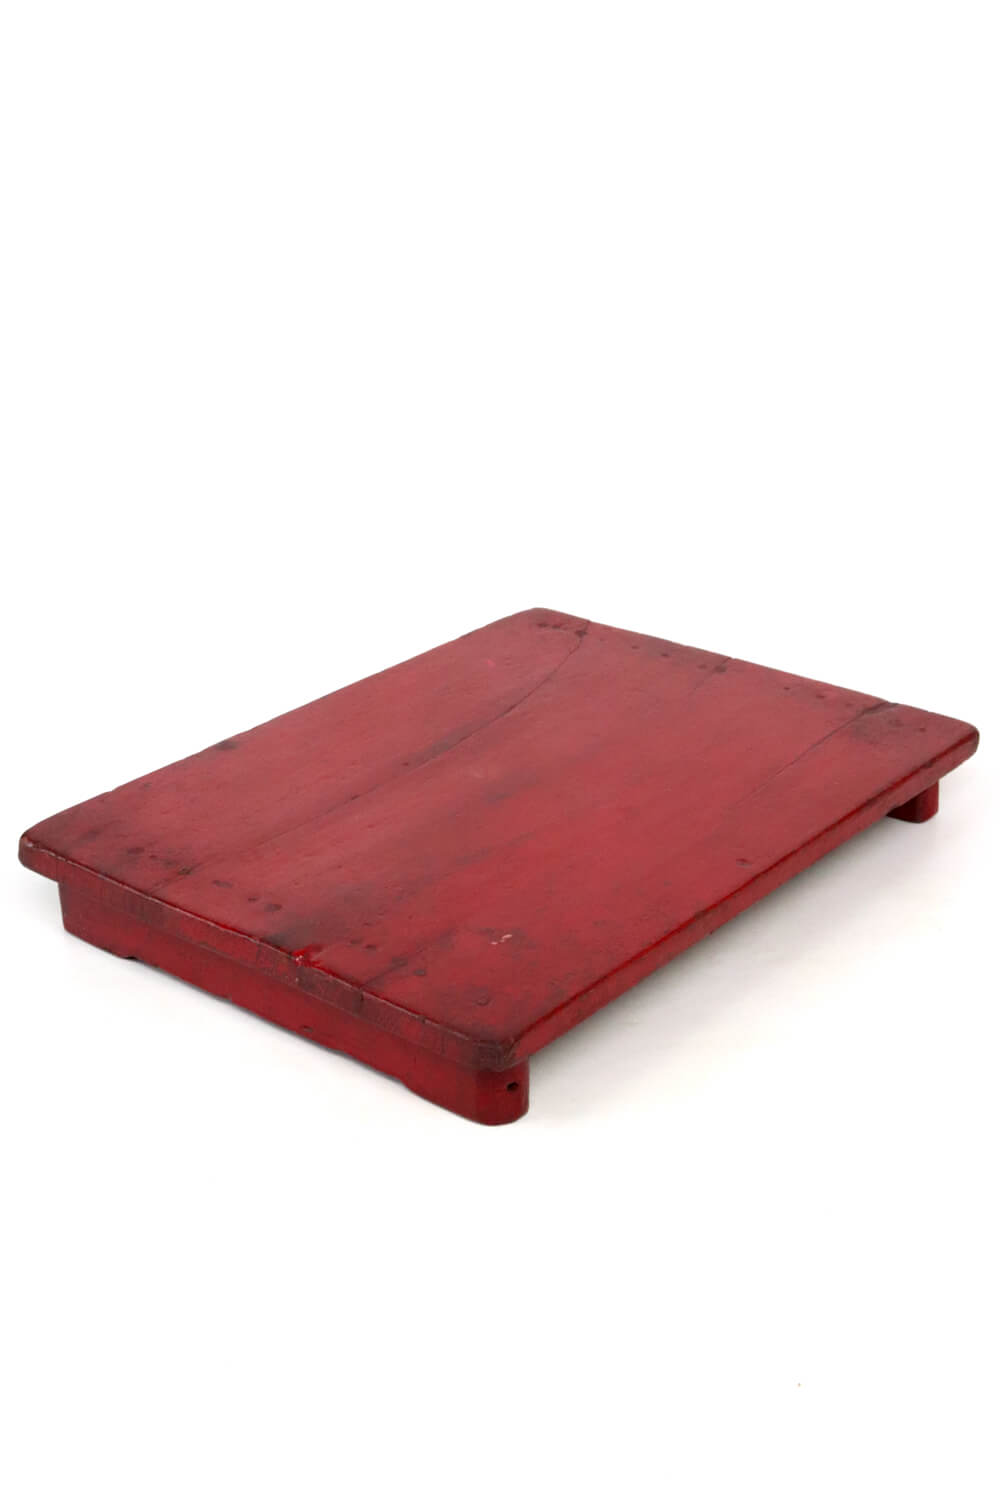 Holztablett Indien antik rot 55x40